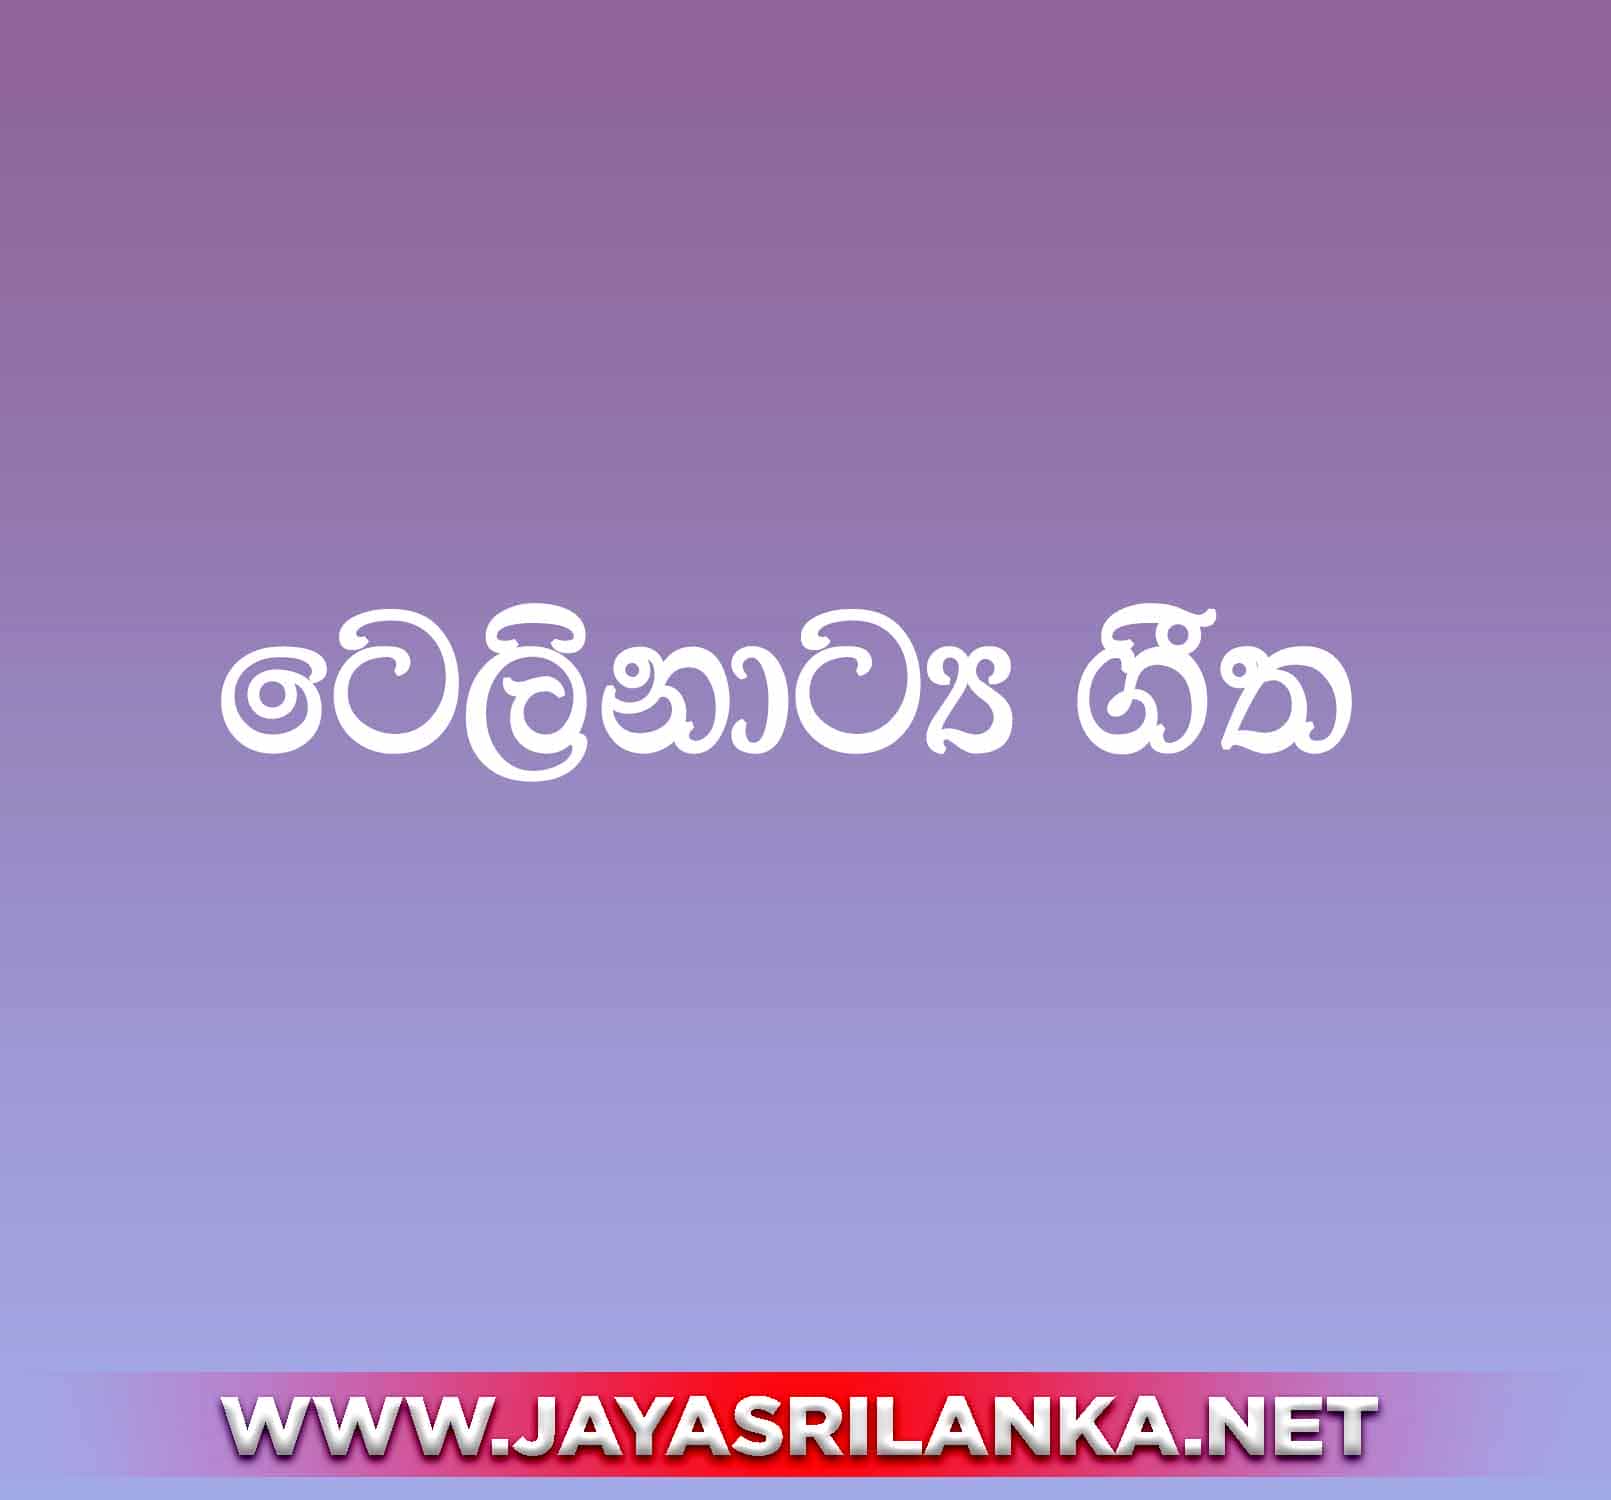 Diwurala Pawasanna - Sinhala Teledrama Songs mp3 Image